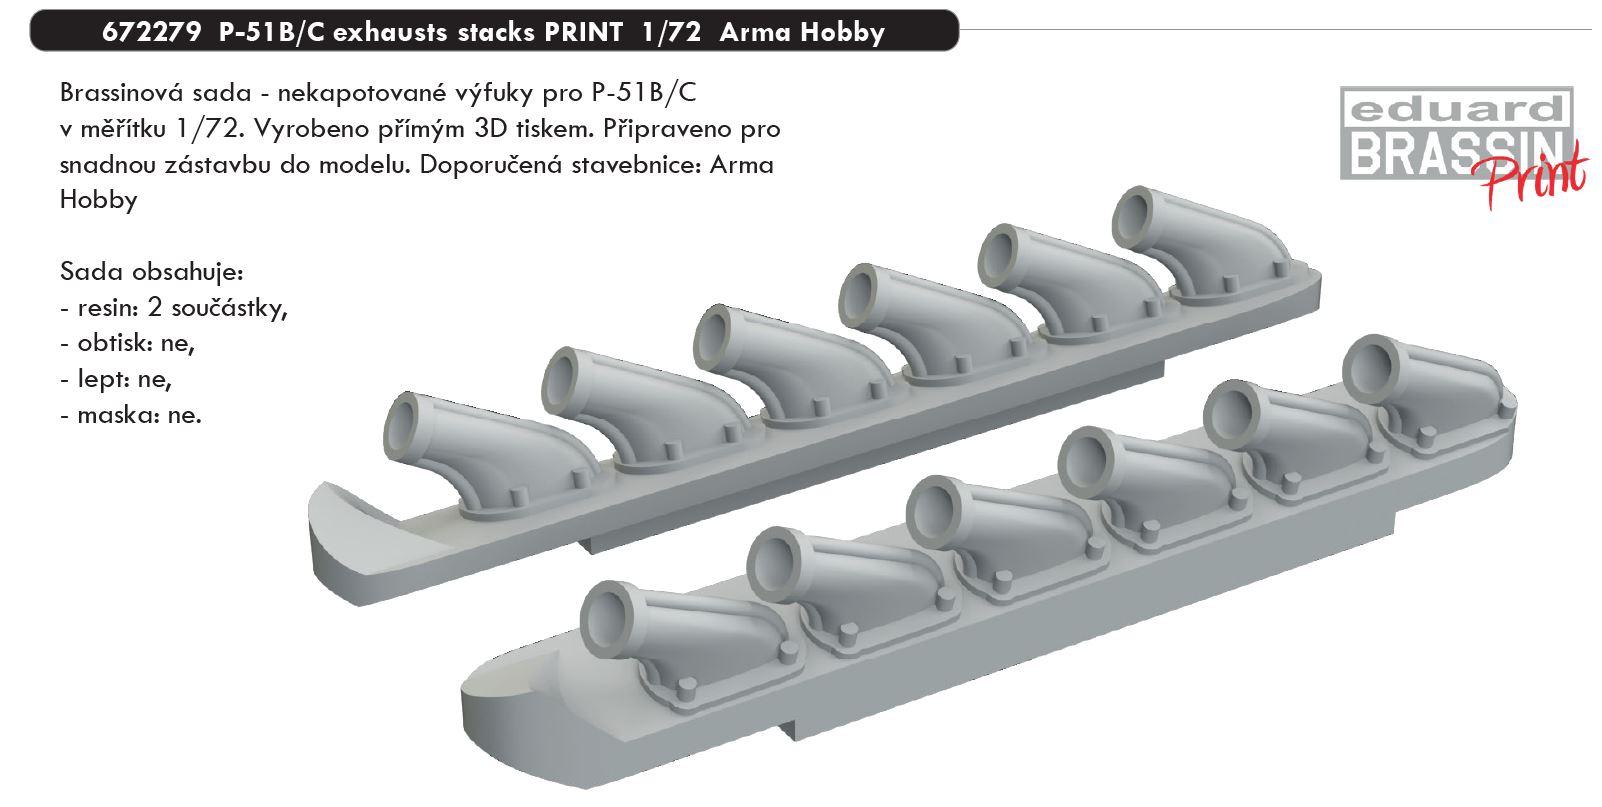 1/72 P-51B/C exhausts stacks PRINT (ARMA HOBBY)